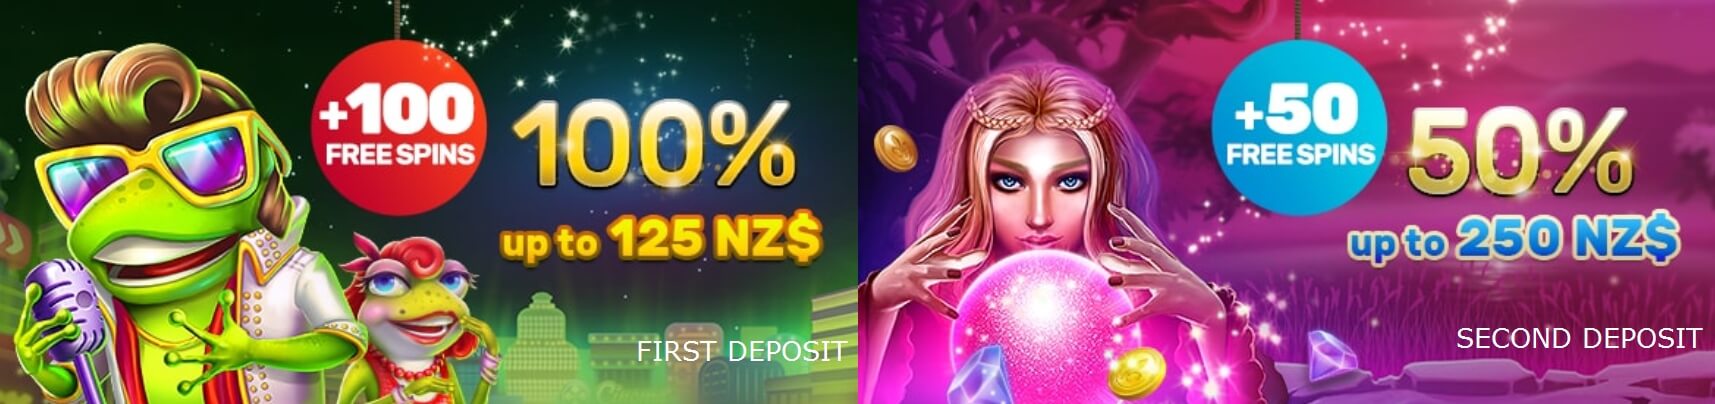 PlayAmo Deposit Bonus